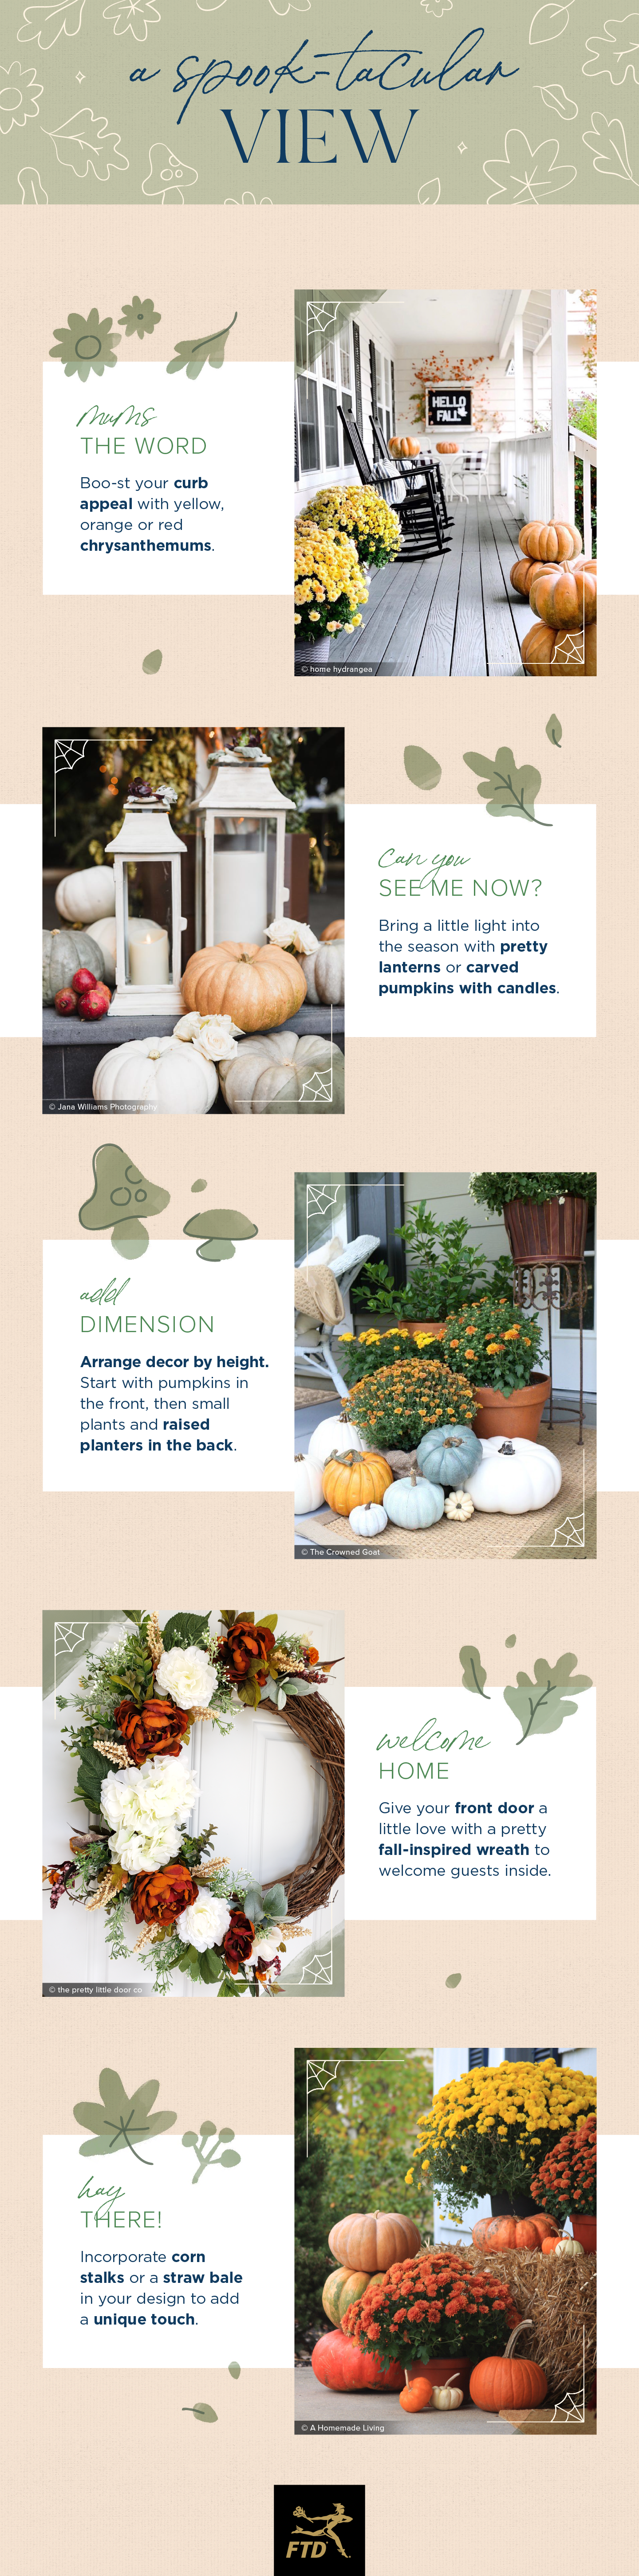 Classy Halloween Plant Decor Ideas + Printable Pumpkin Carving Stencils